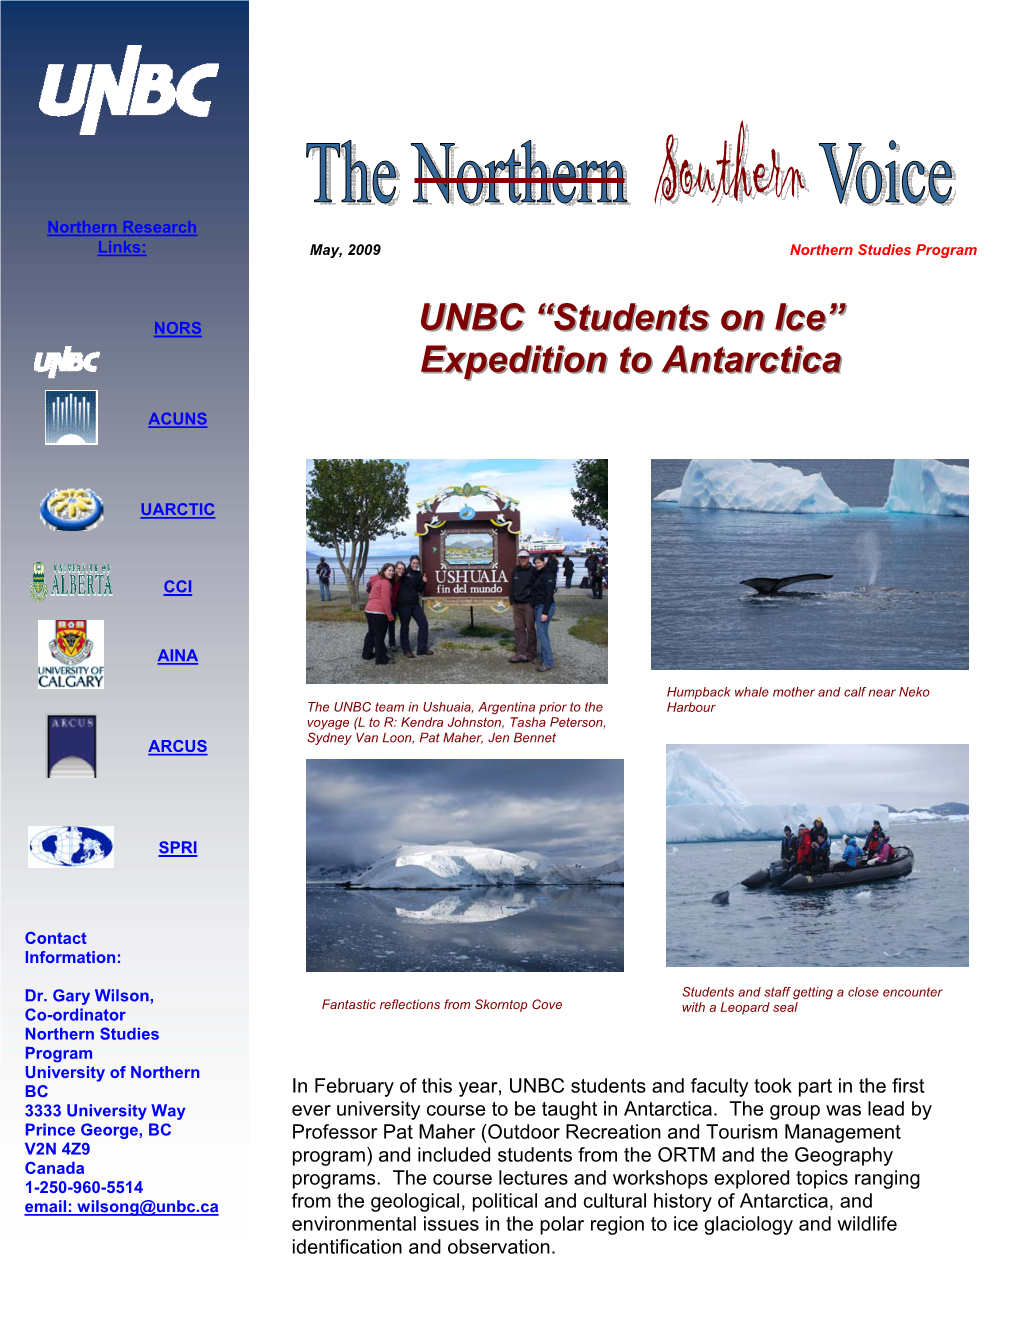 UNBC “Students on Ice” Expedition to Antarctica